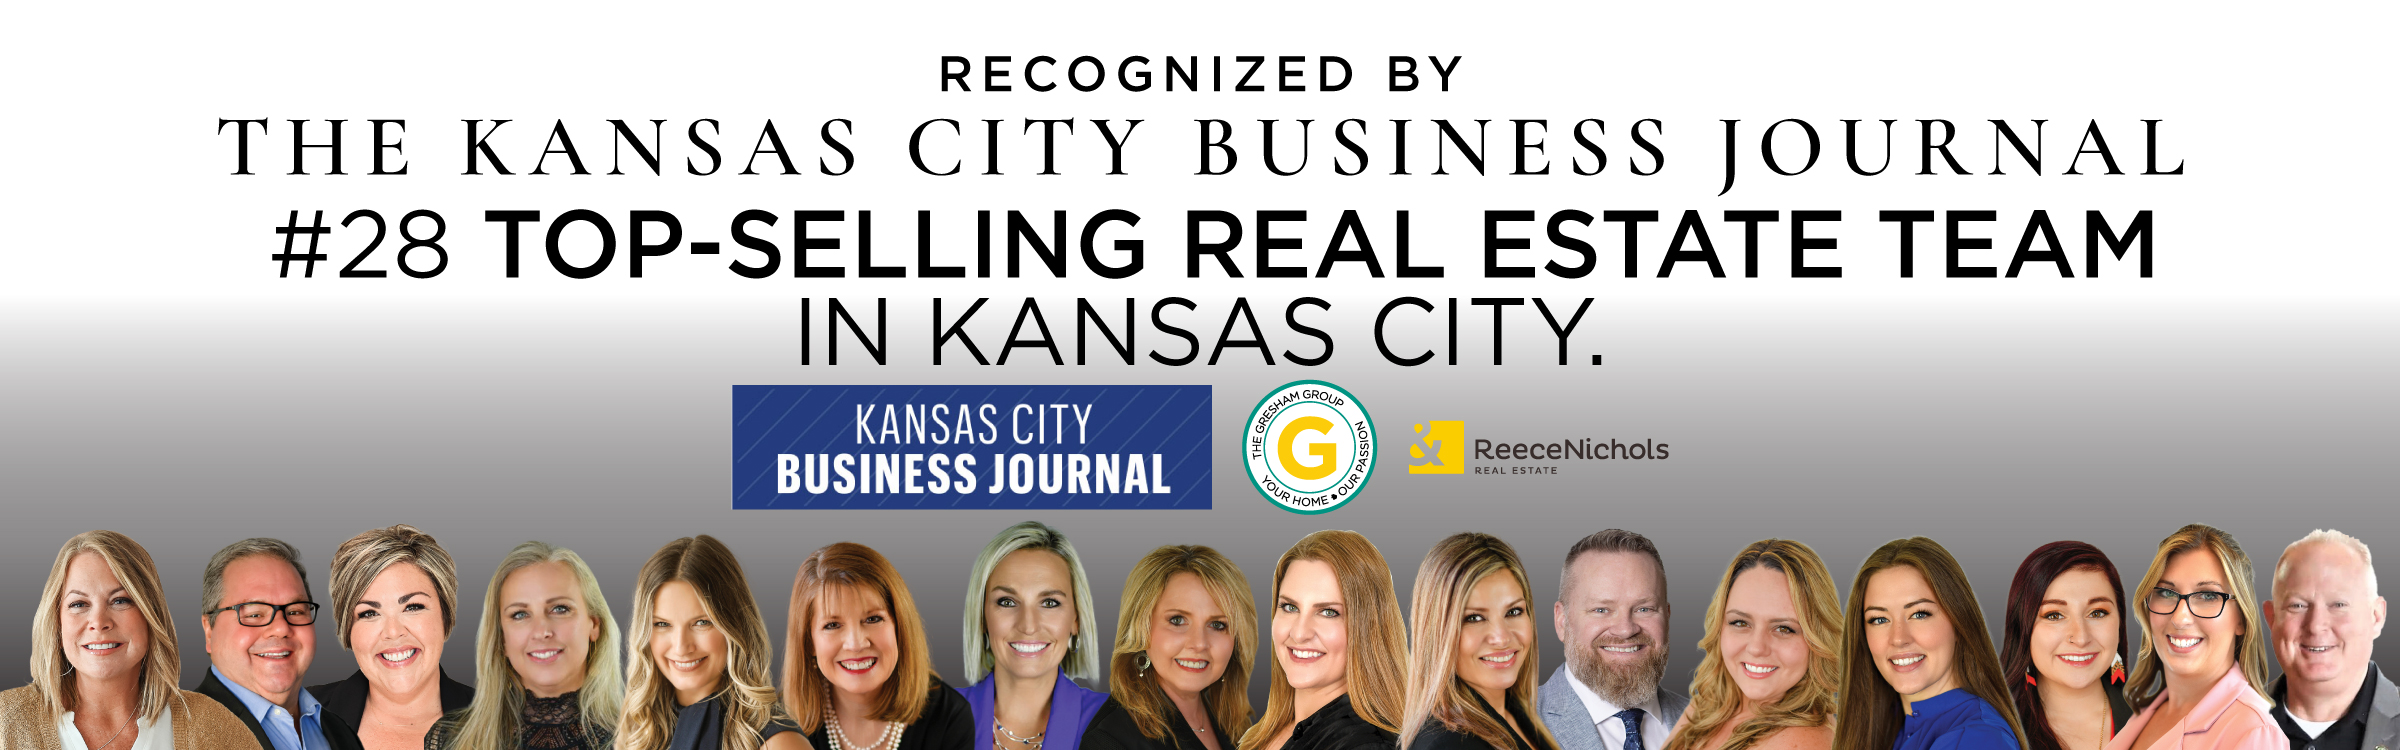 Kansas City Business Journal - The Gresham Group